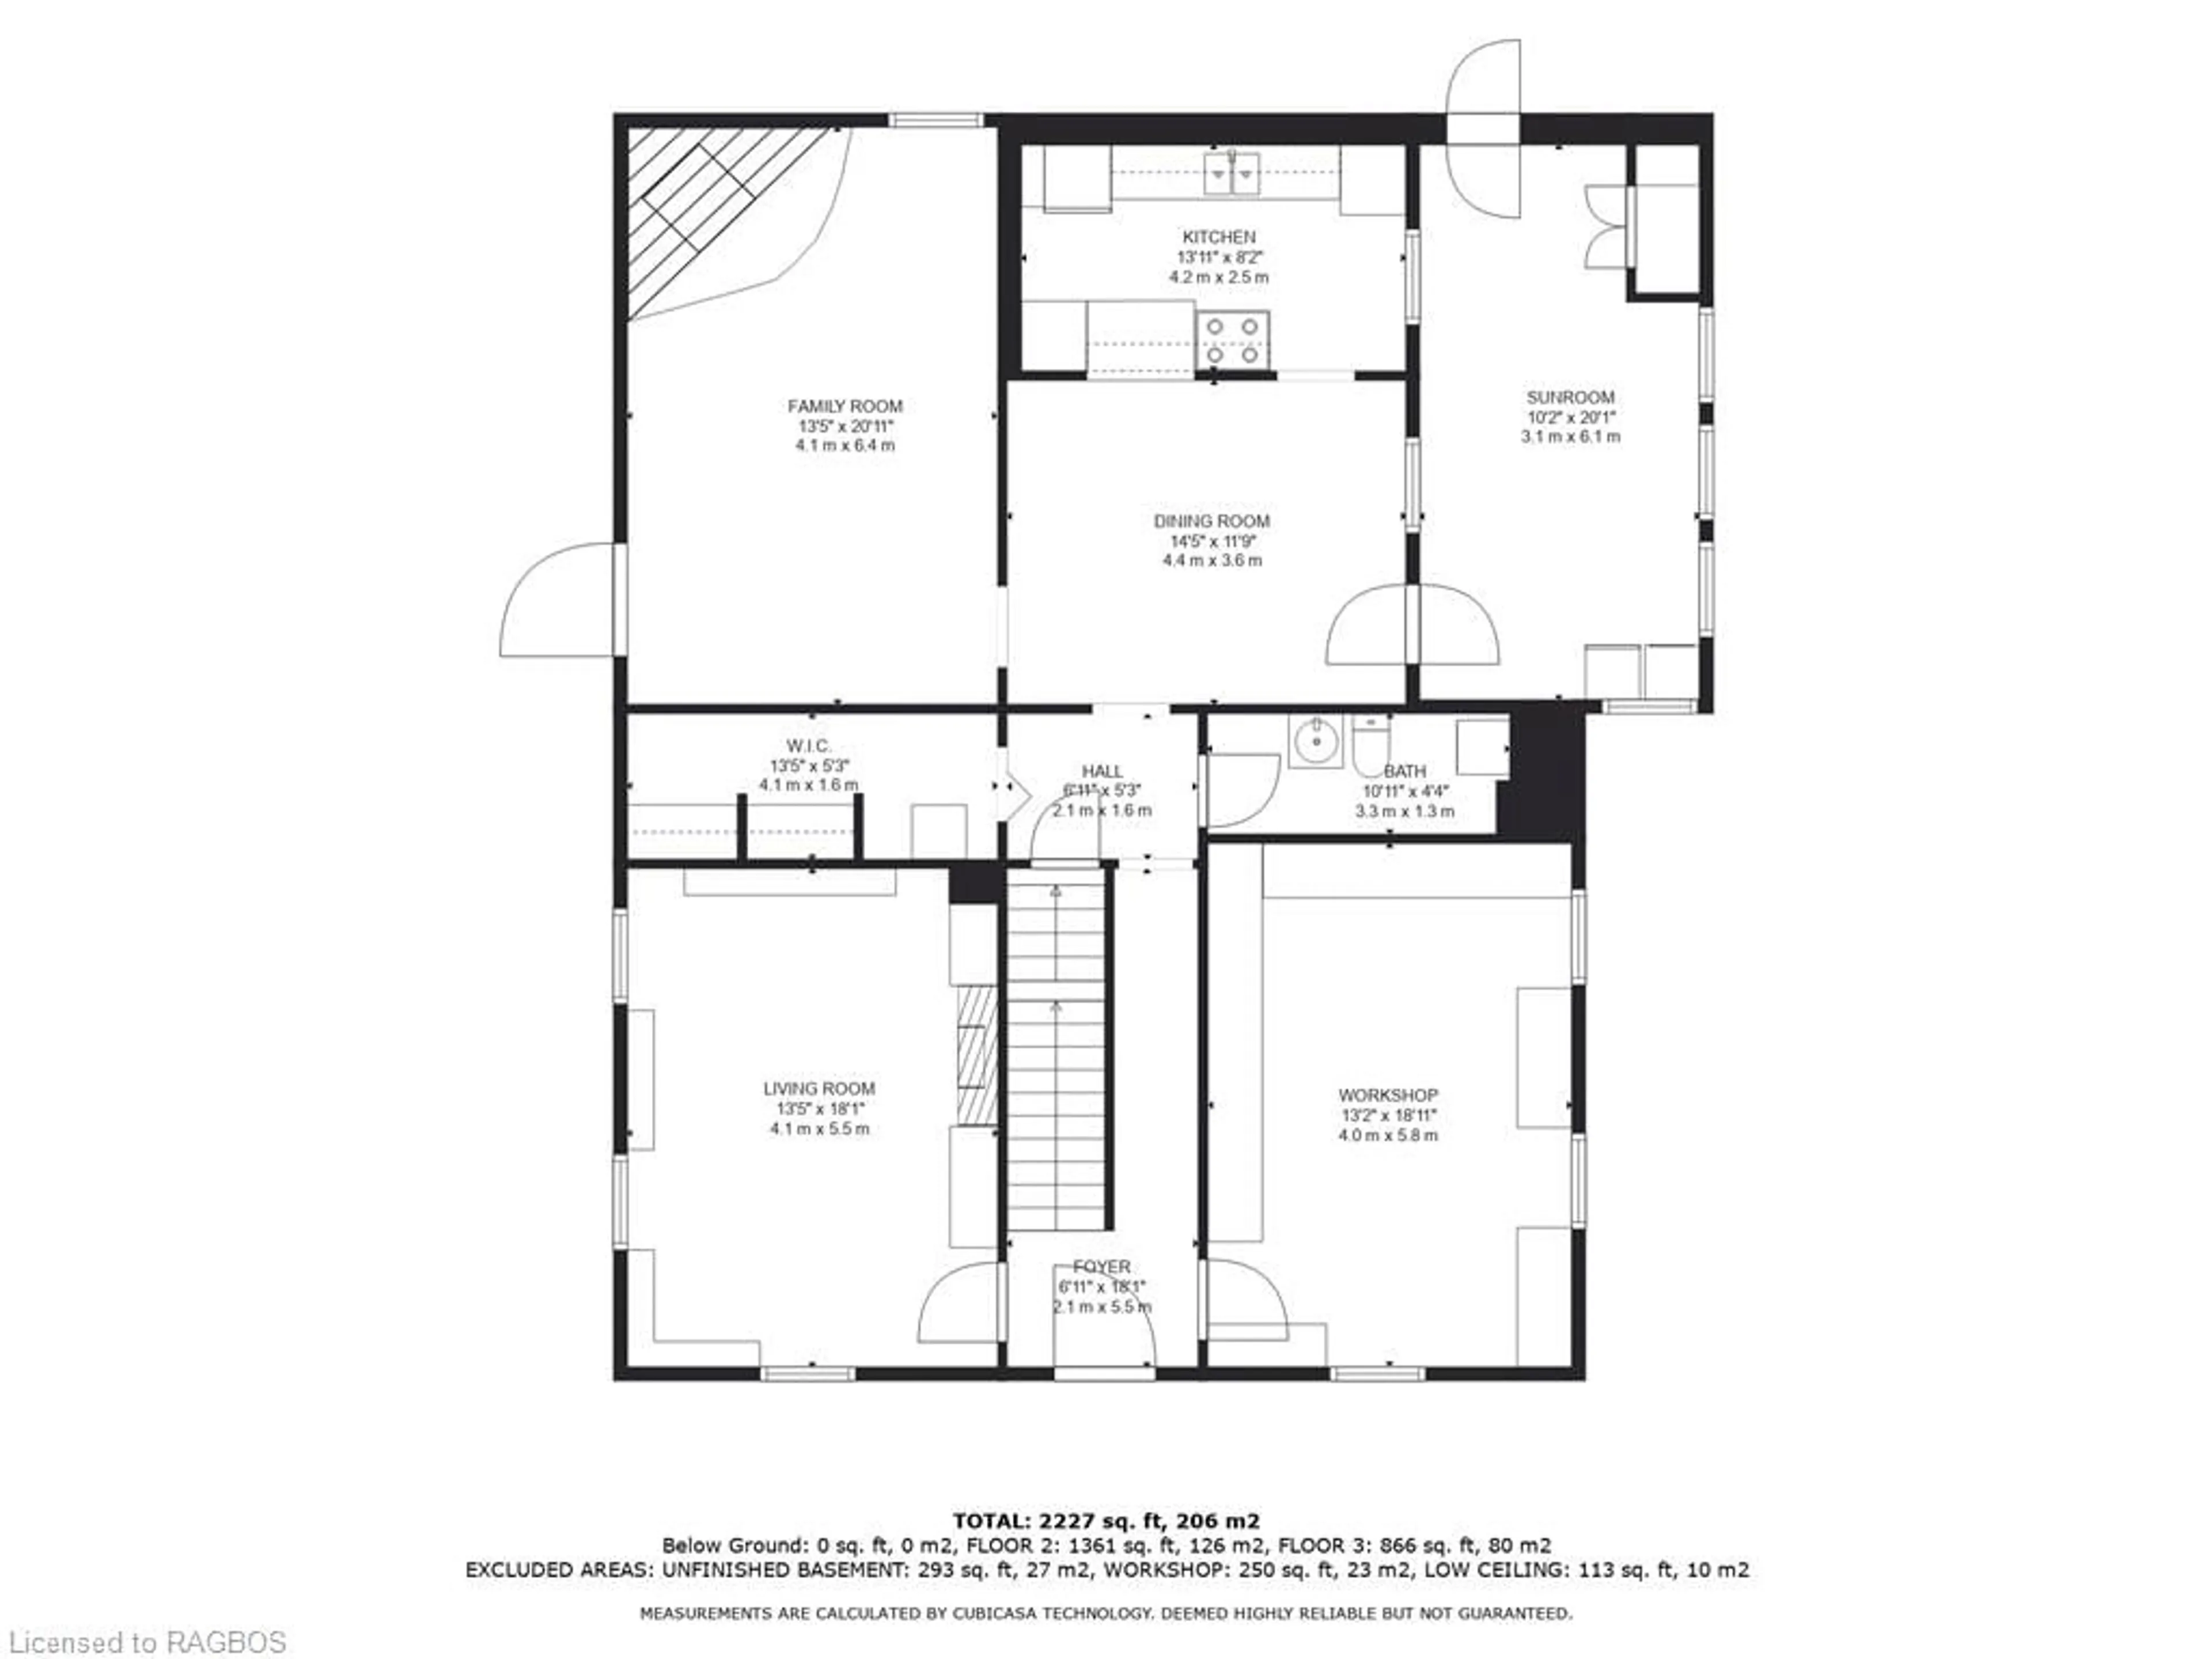 Floor plan for 10 Geddes St E, Clifford Ontario N0G 1M0